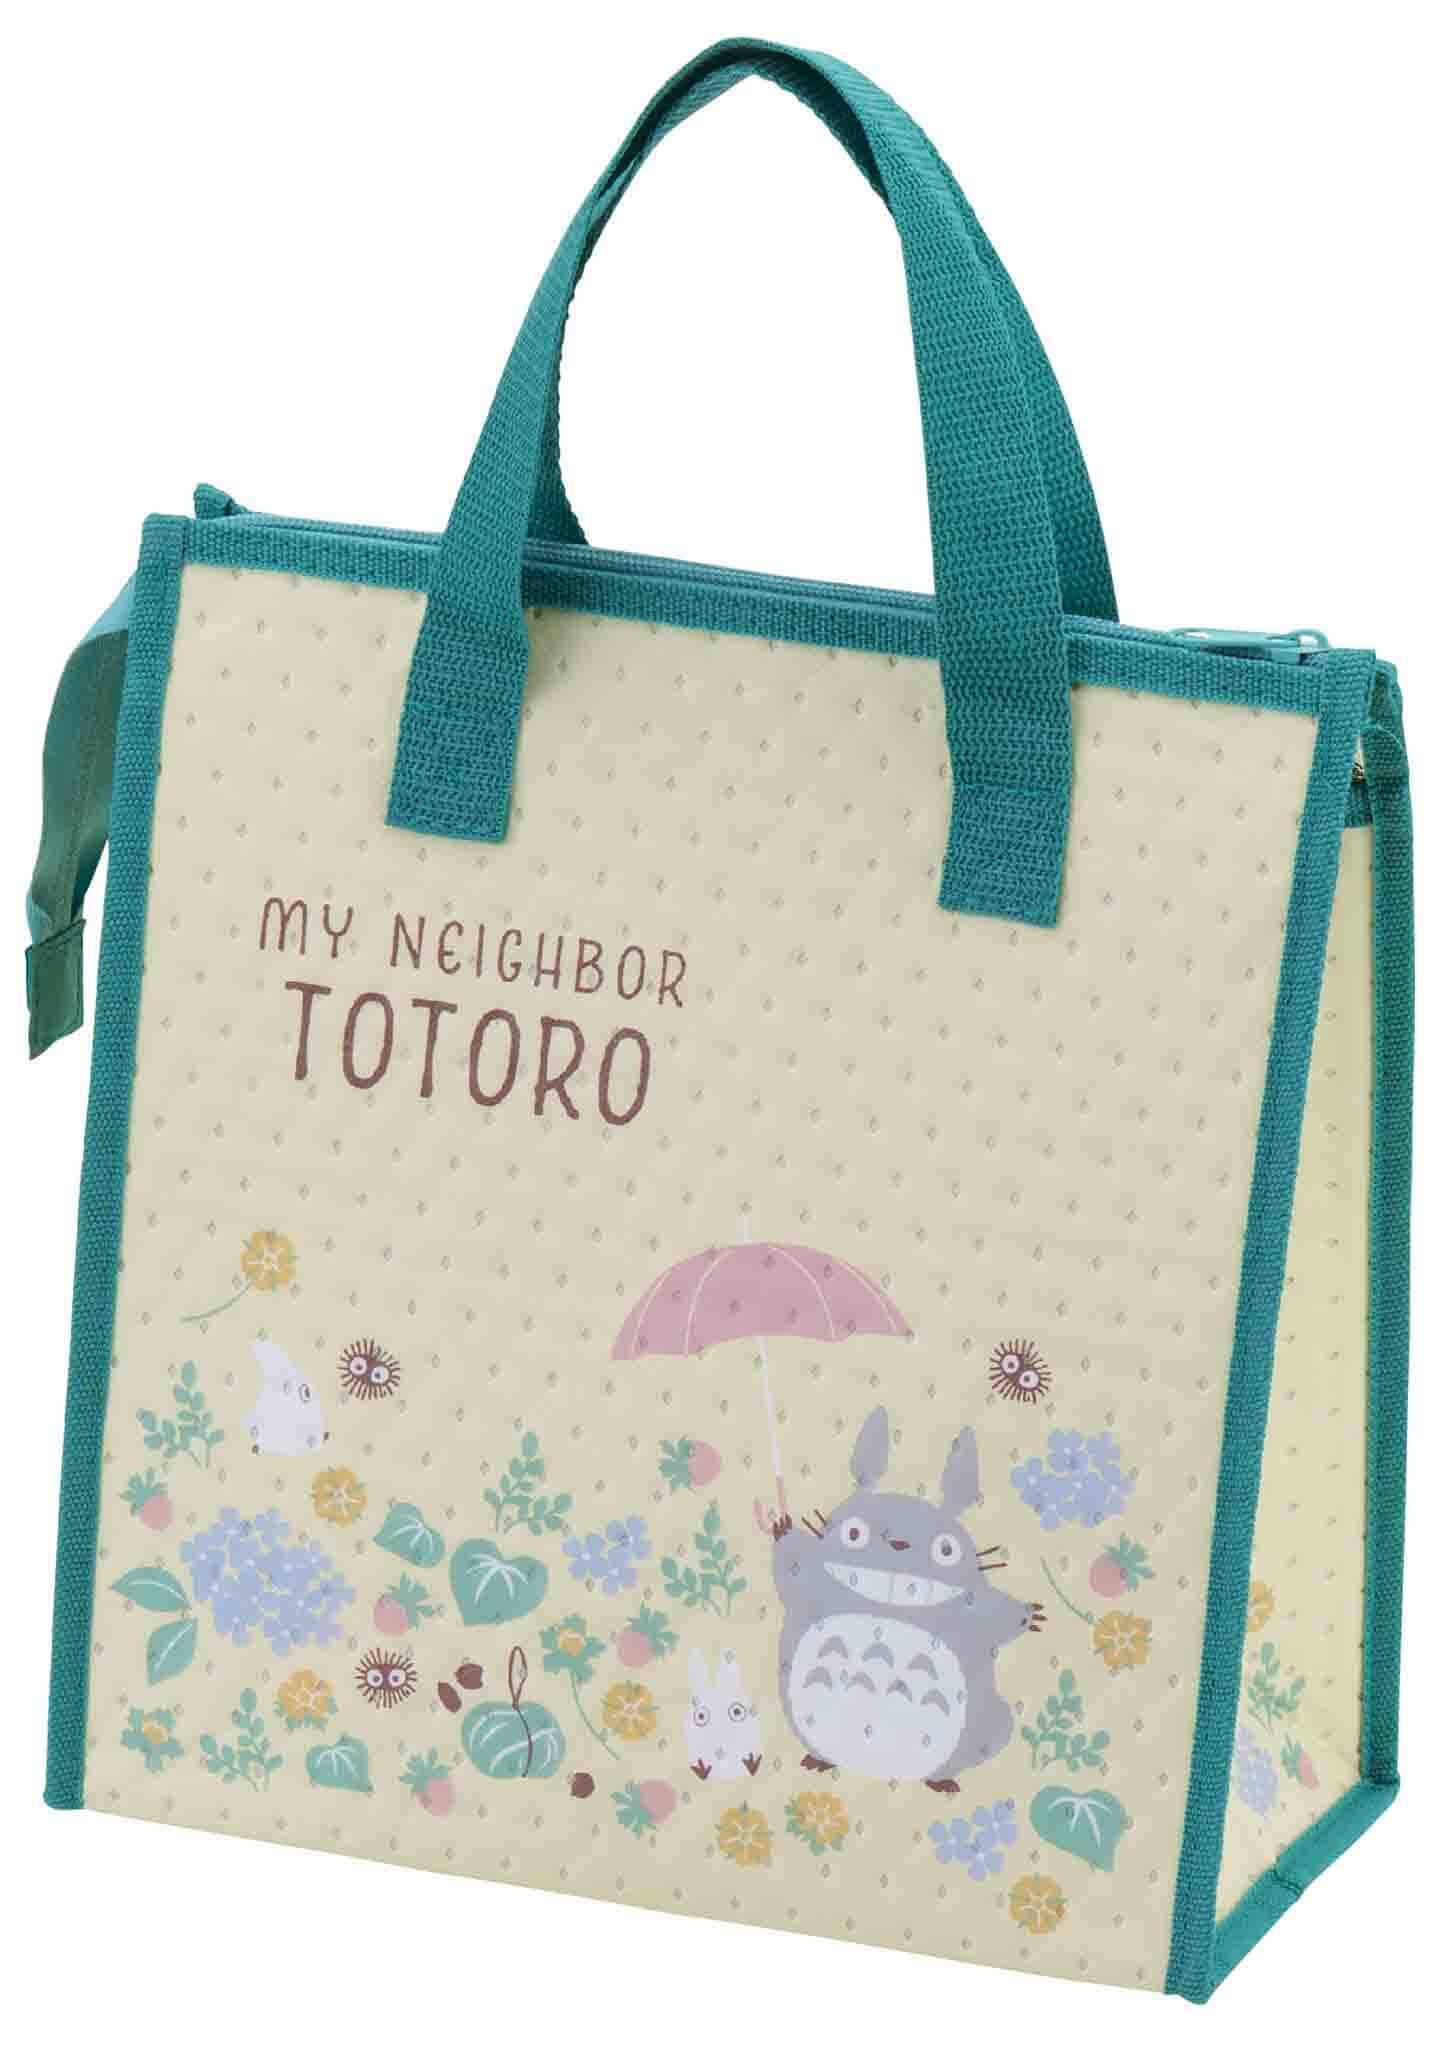 My Neighbor Totoro: Flower Field Insulated Lunch Bag